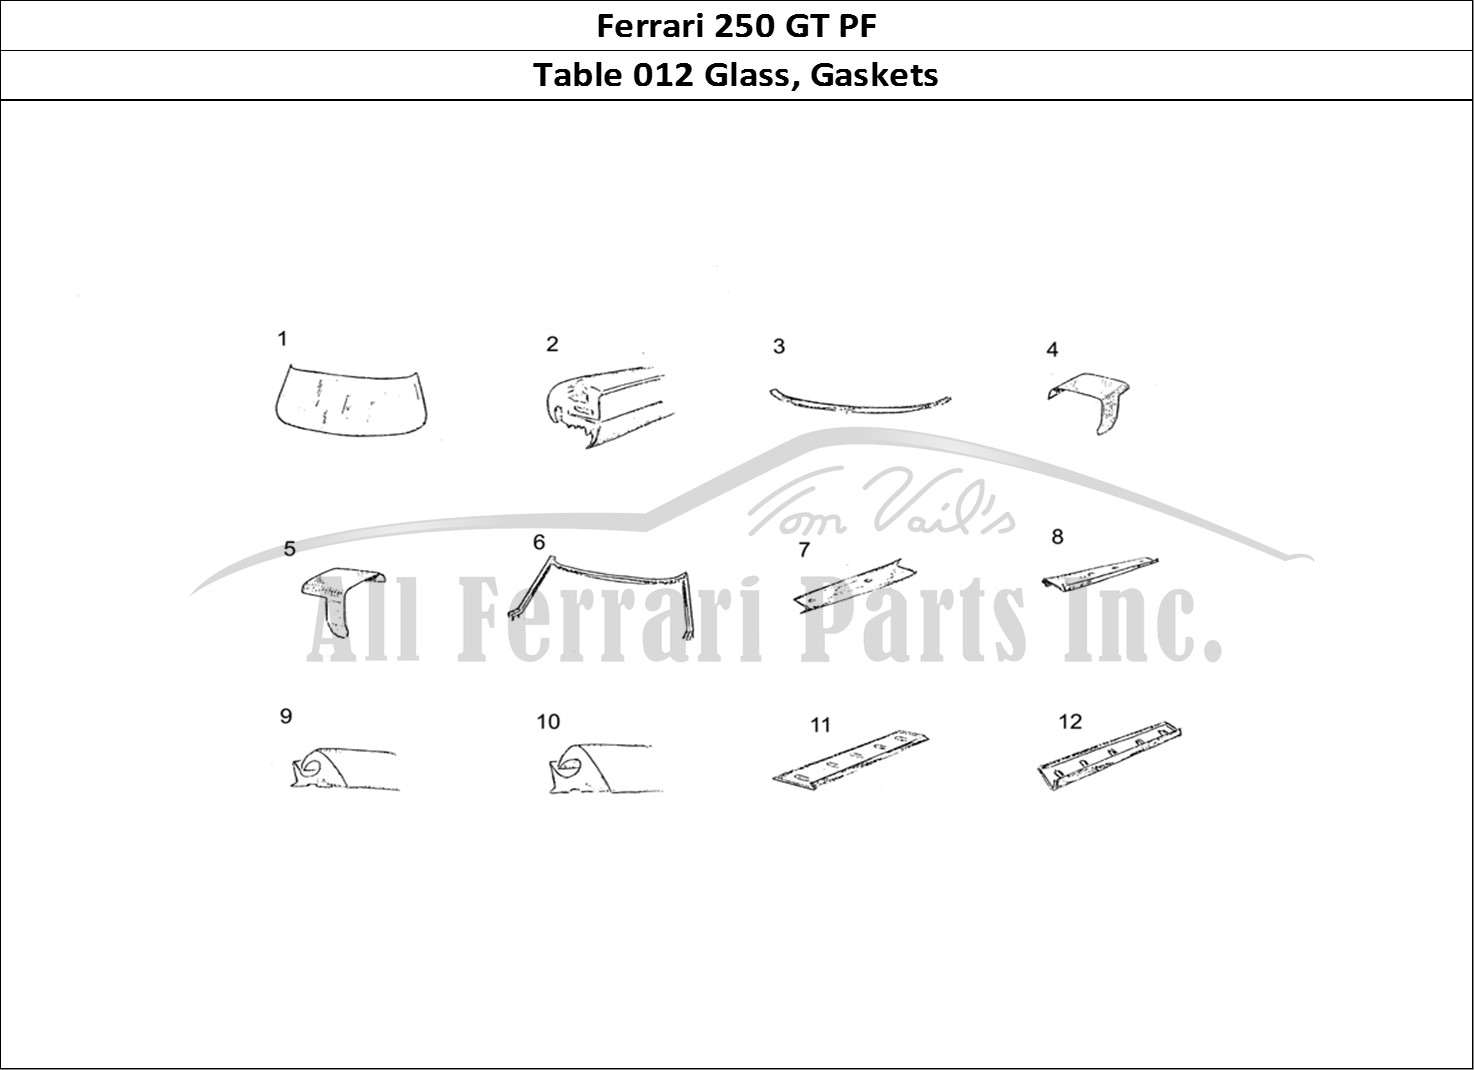 Ferrari Parts Ferrari 250 GT (Coachwork) Page 012 Glass & Rubbers